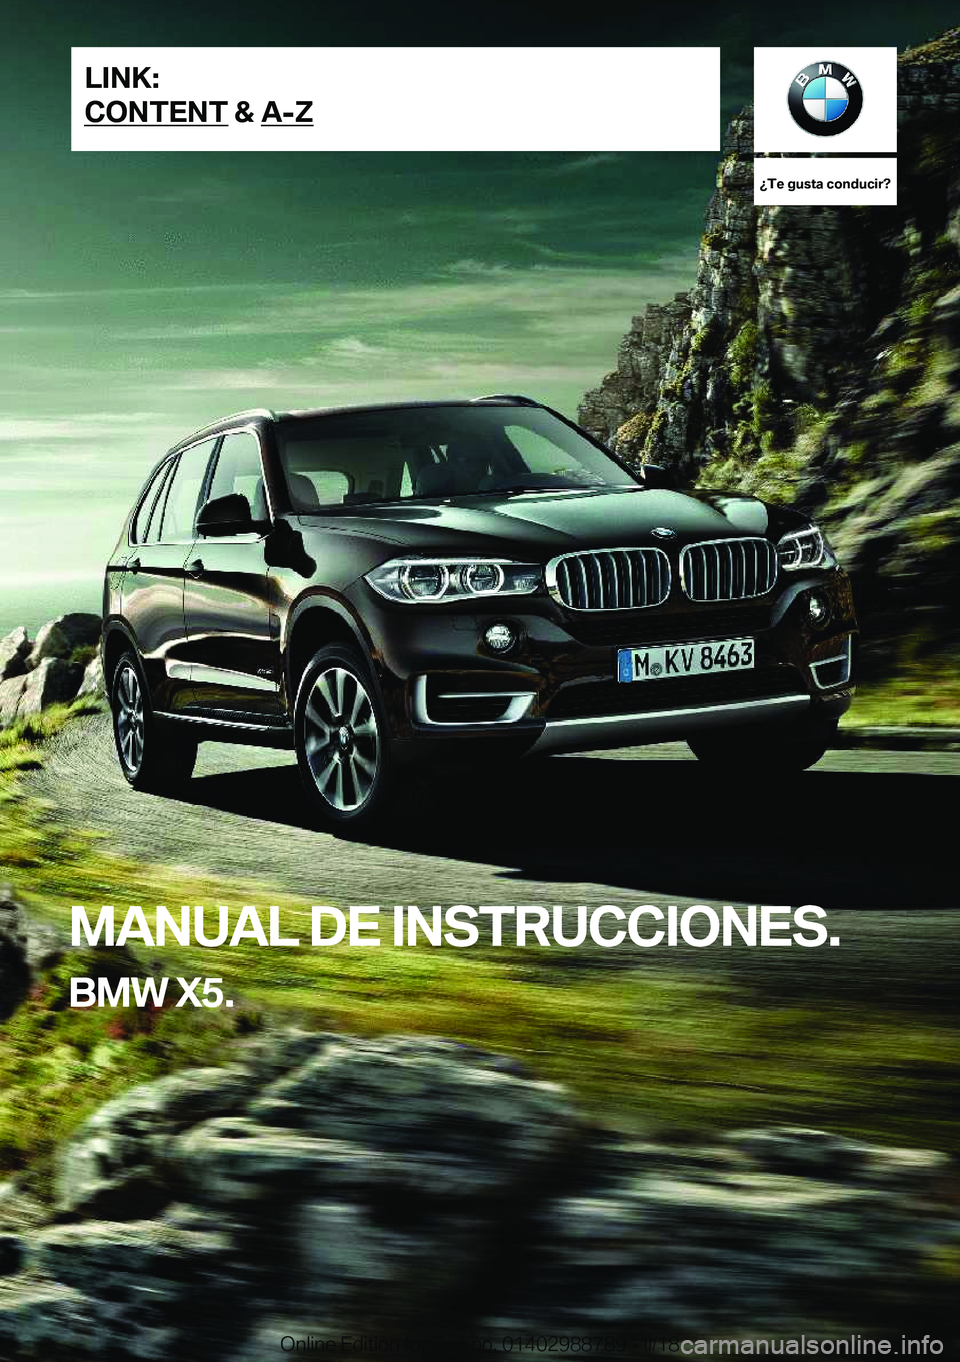 BMW X5 2018  Manuales de Empleo (in Spanish) ��T�e��g�u�s�t�a��c�o�n�d�u�c�i�r� 
�M�A�N�U�A�L��D�E��I�N�S�T�R�U�C�C�I�O�N�E�S�.
�B�M�W��X�5�.�L�I�N�K�:
�C�O�N�T�E�N�T��&��A�-�Z�O�n�l�i�n�e� �E�d�i�t�i�o�n� �f�o�r� �P�a�r�t� �n�o�.� �0�1�